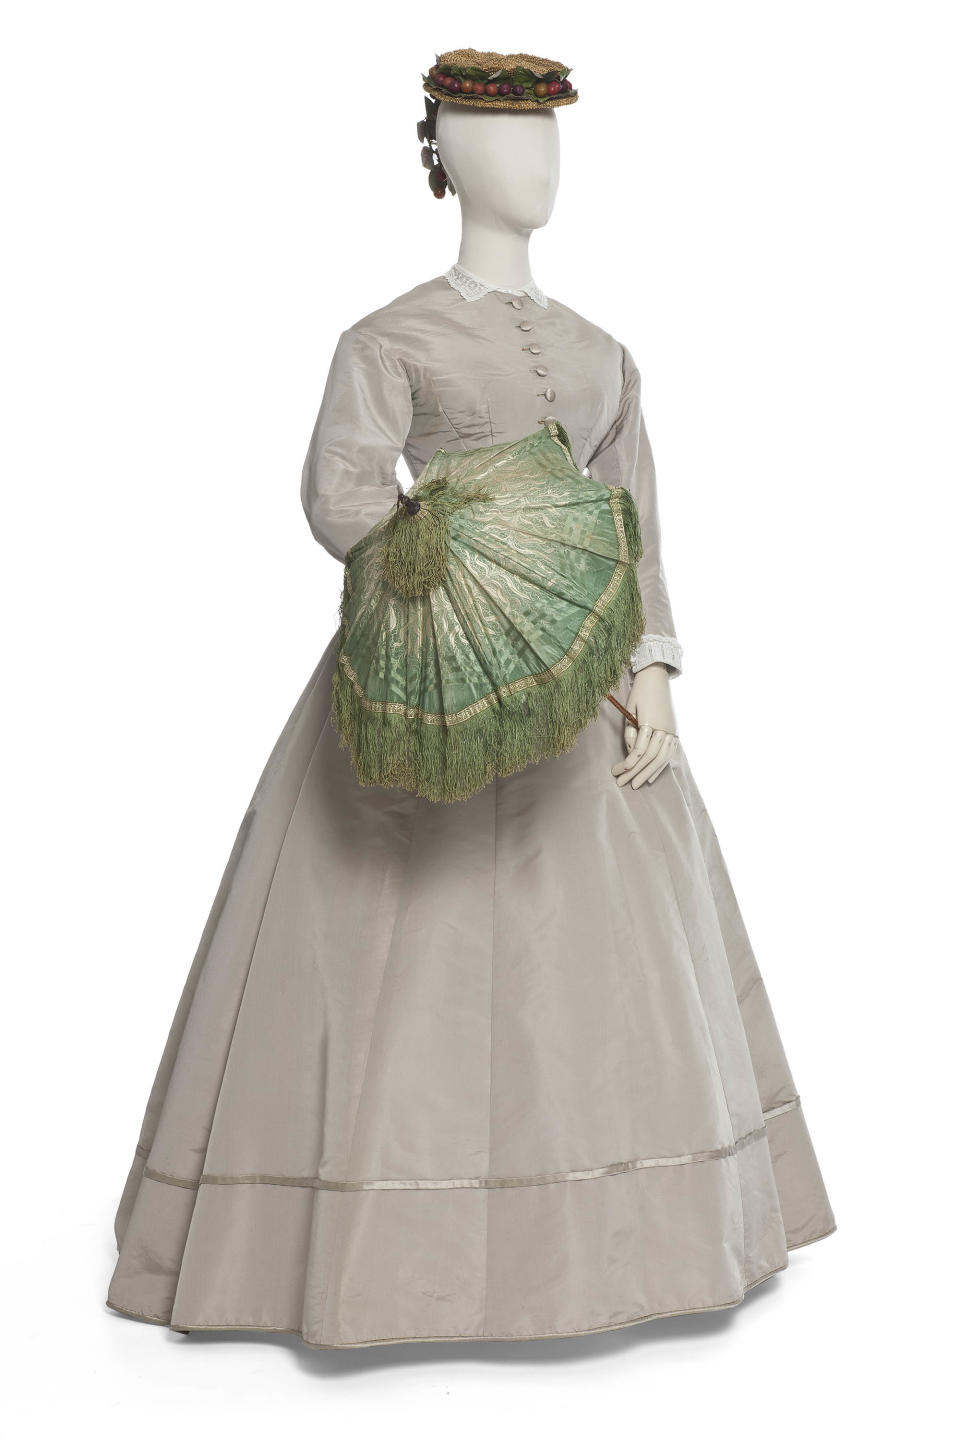 A silk faille and taffeta dress available from the era.